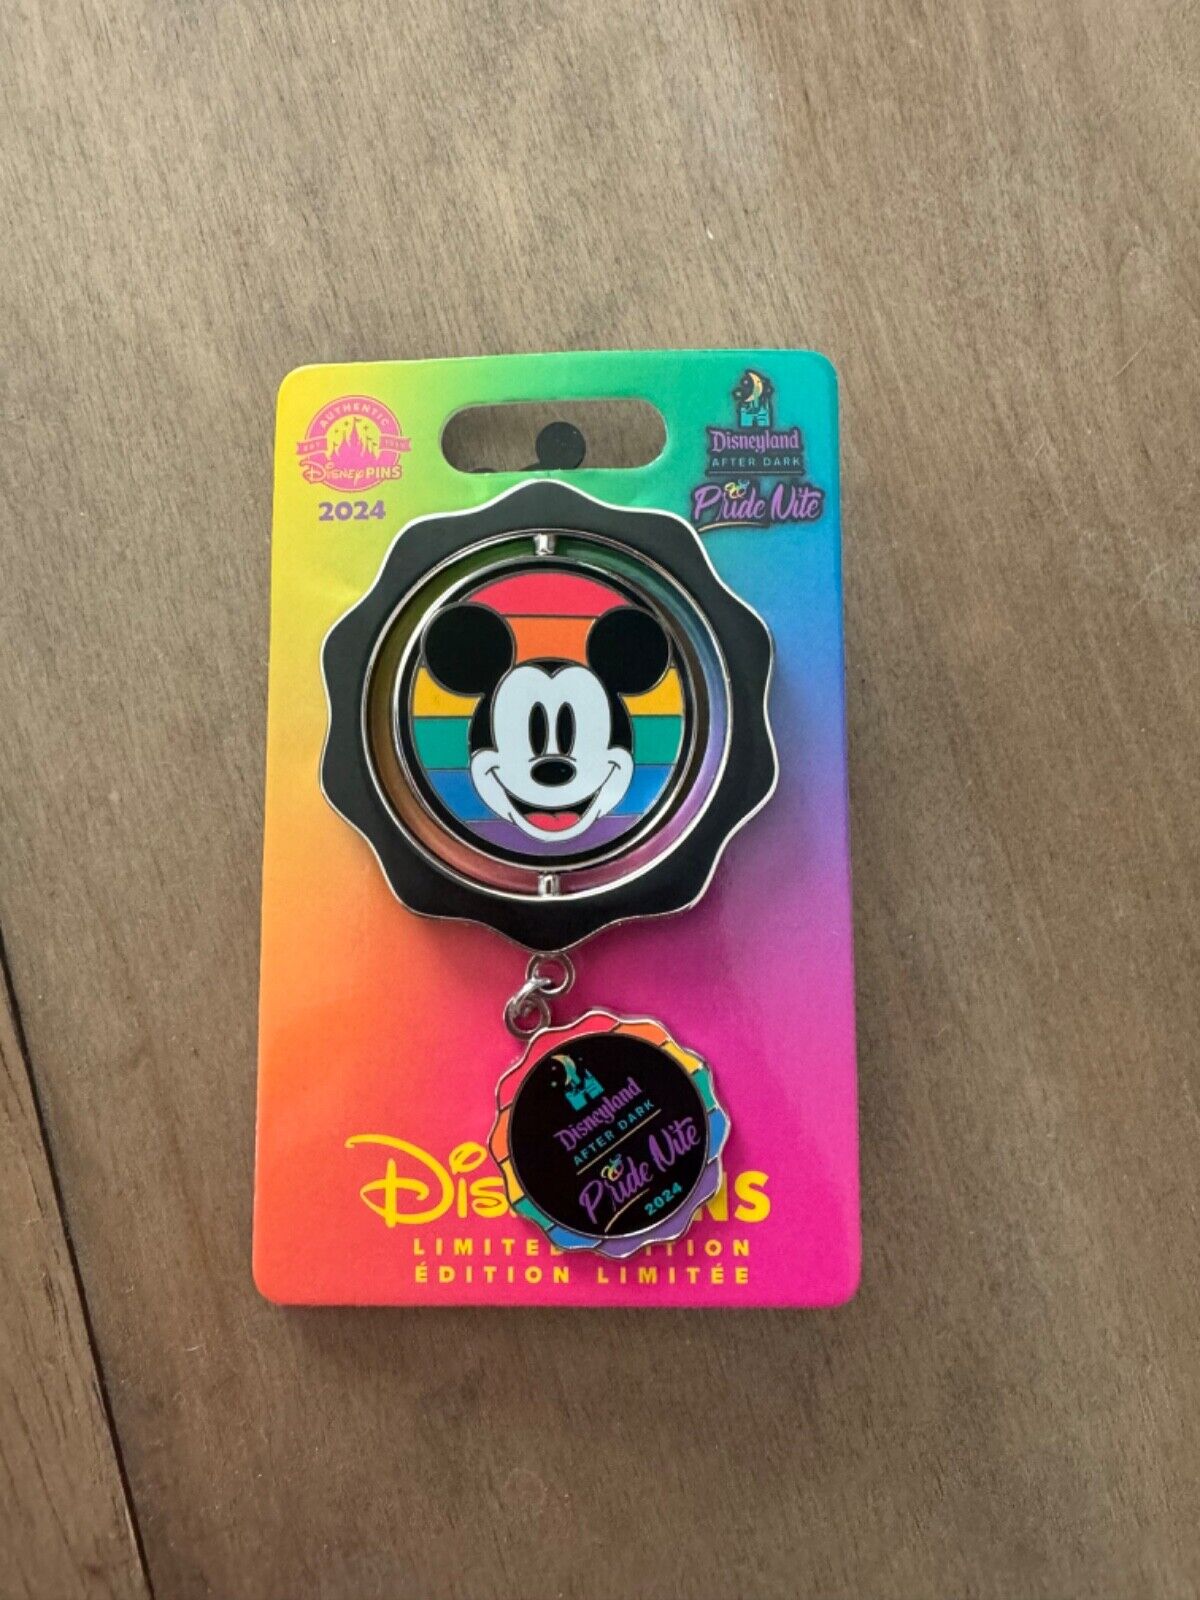 Disneyland Pride Night 2024 Pin